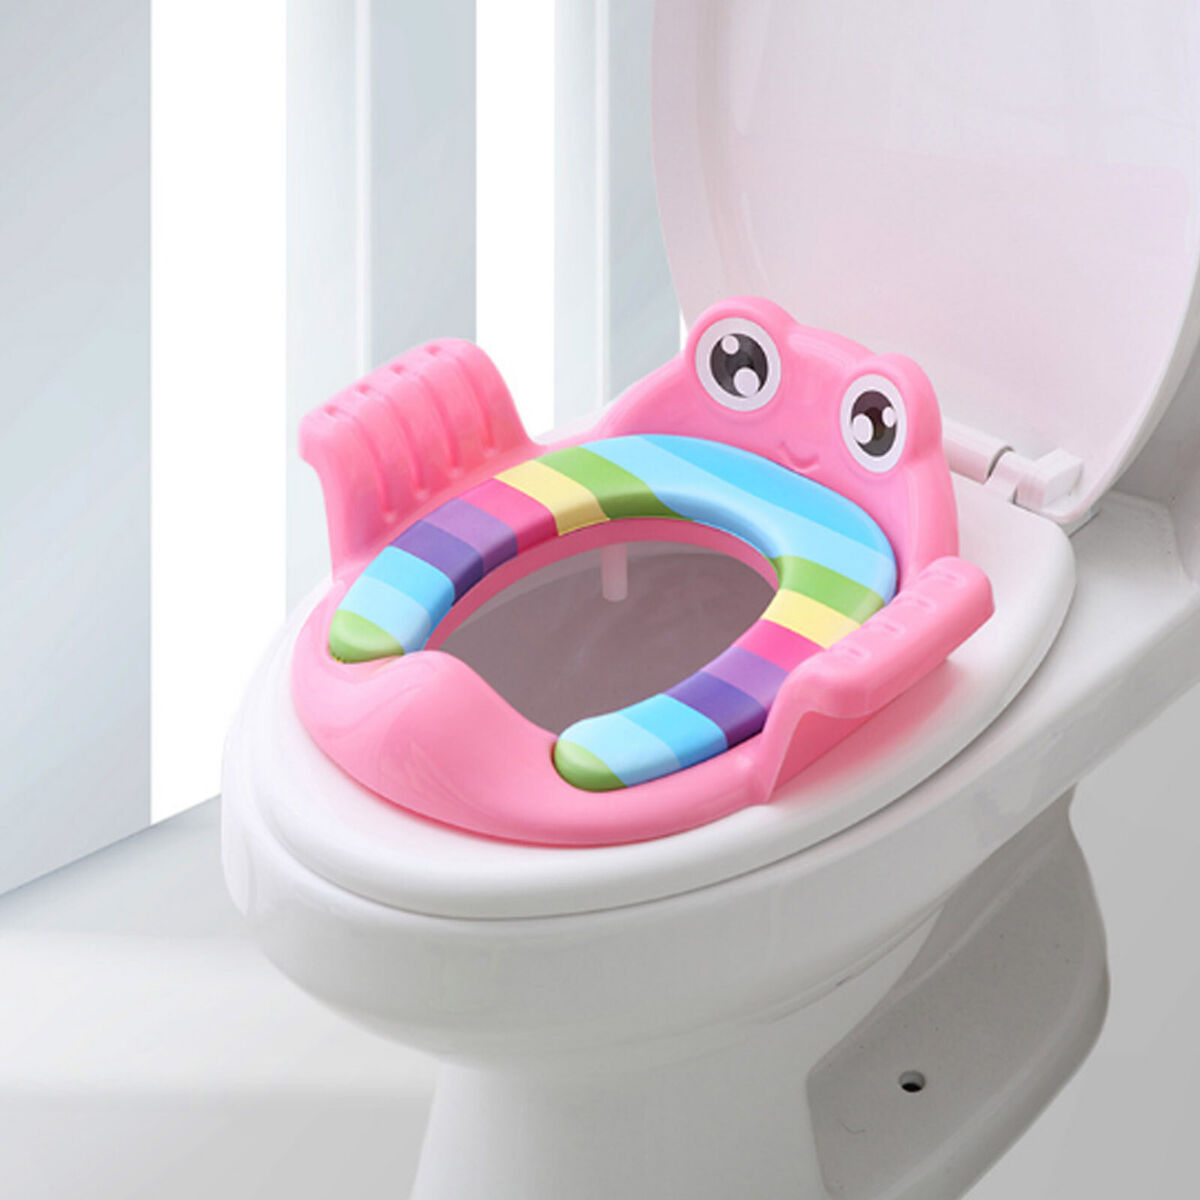 toilet seat handles toddler Potty soft